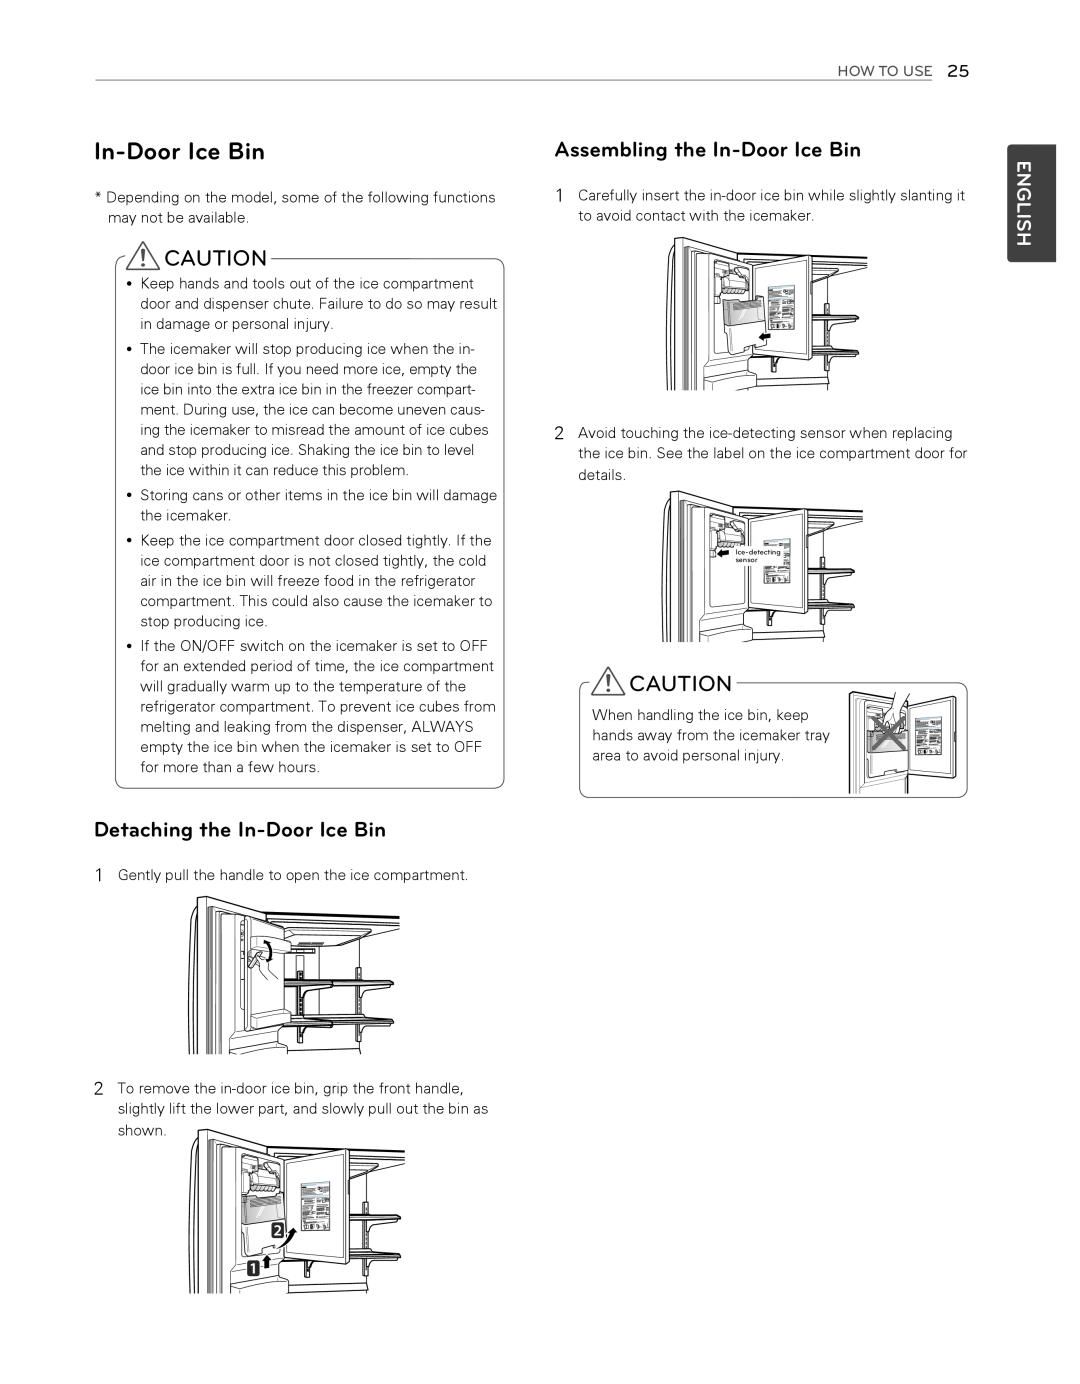 LG Electronics LFX25974ST, LFX25974SB Assembling the In-DoorIce Bin, Detaching the In-DoorIce Bin, English, How To Use 